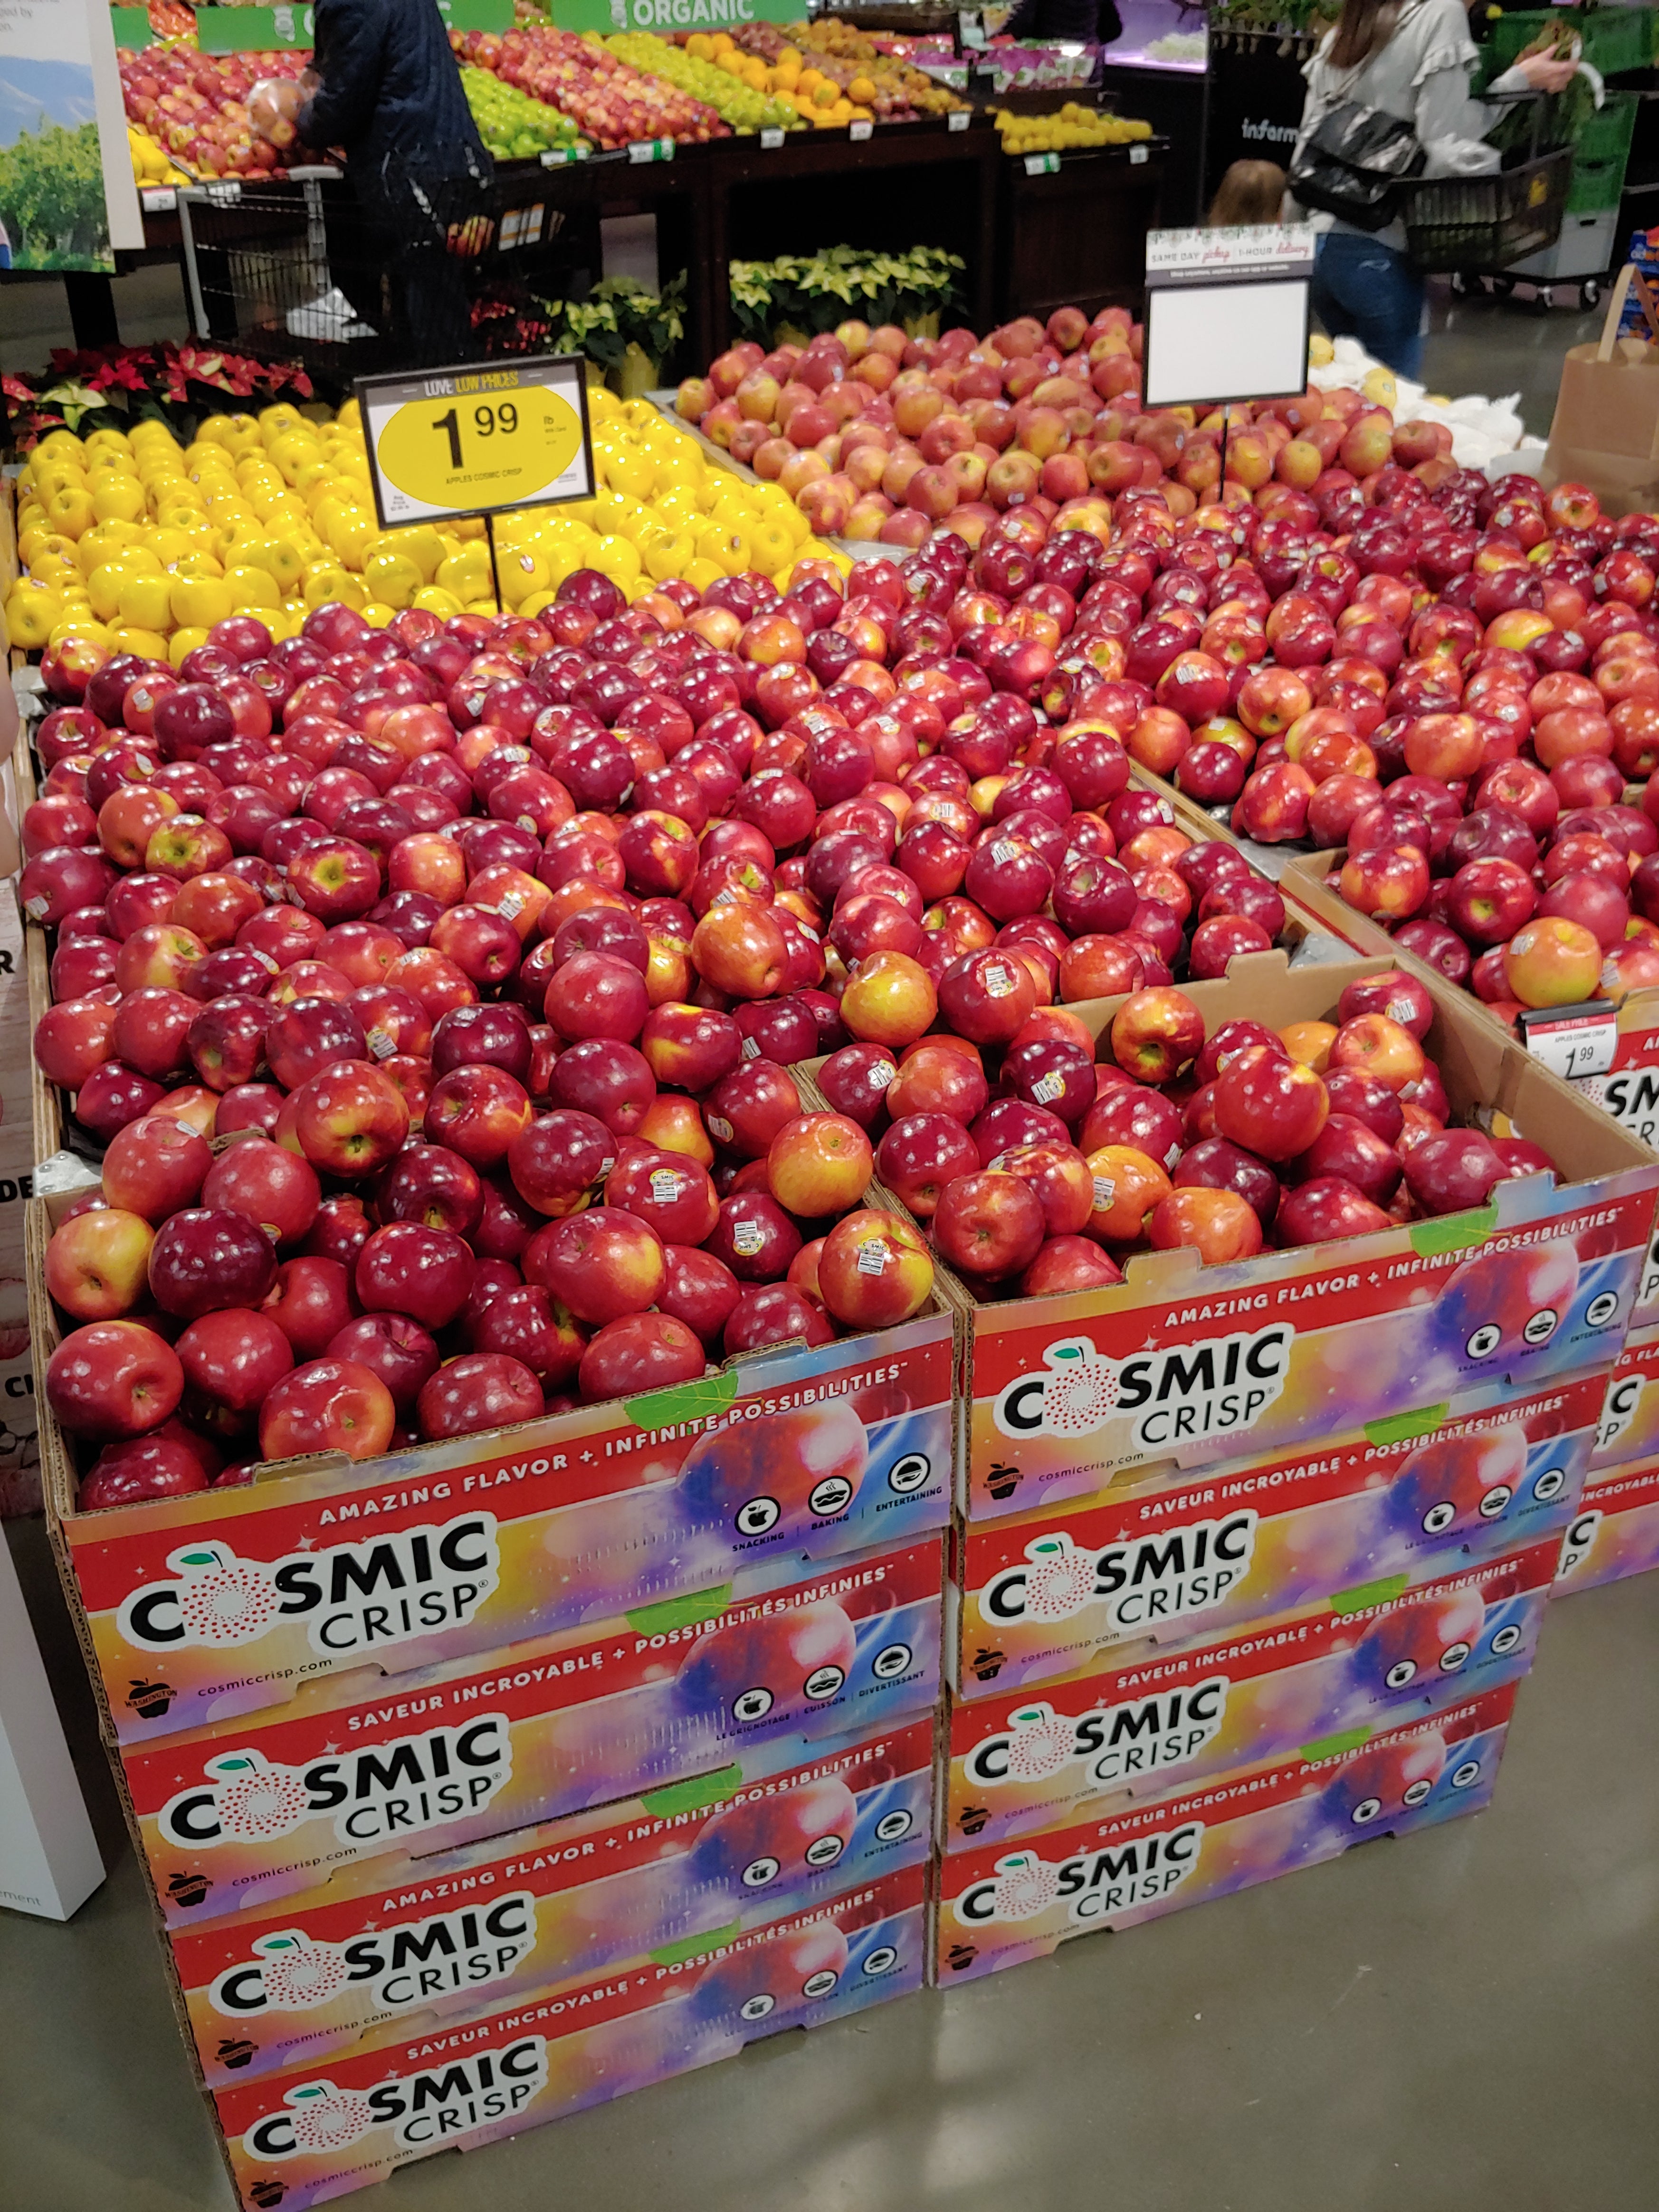 Organic Large Cosmic Crisp Apples, Large/ 1 Count - City Market